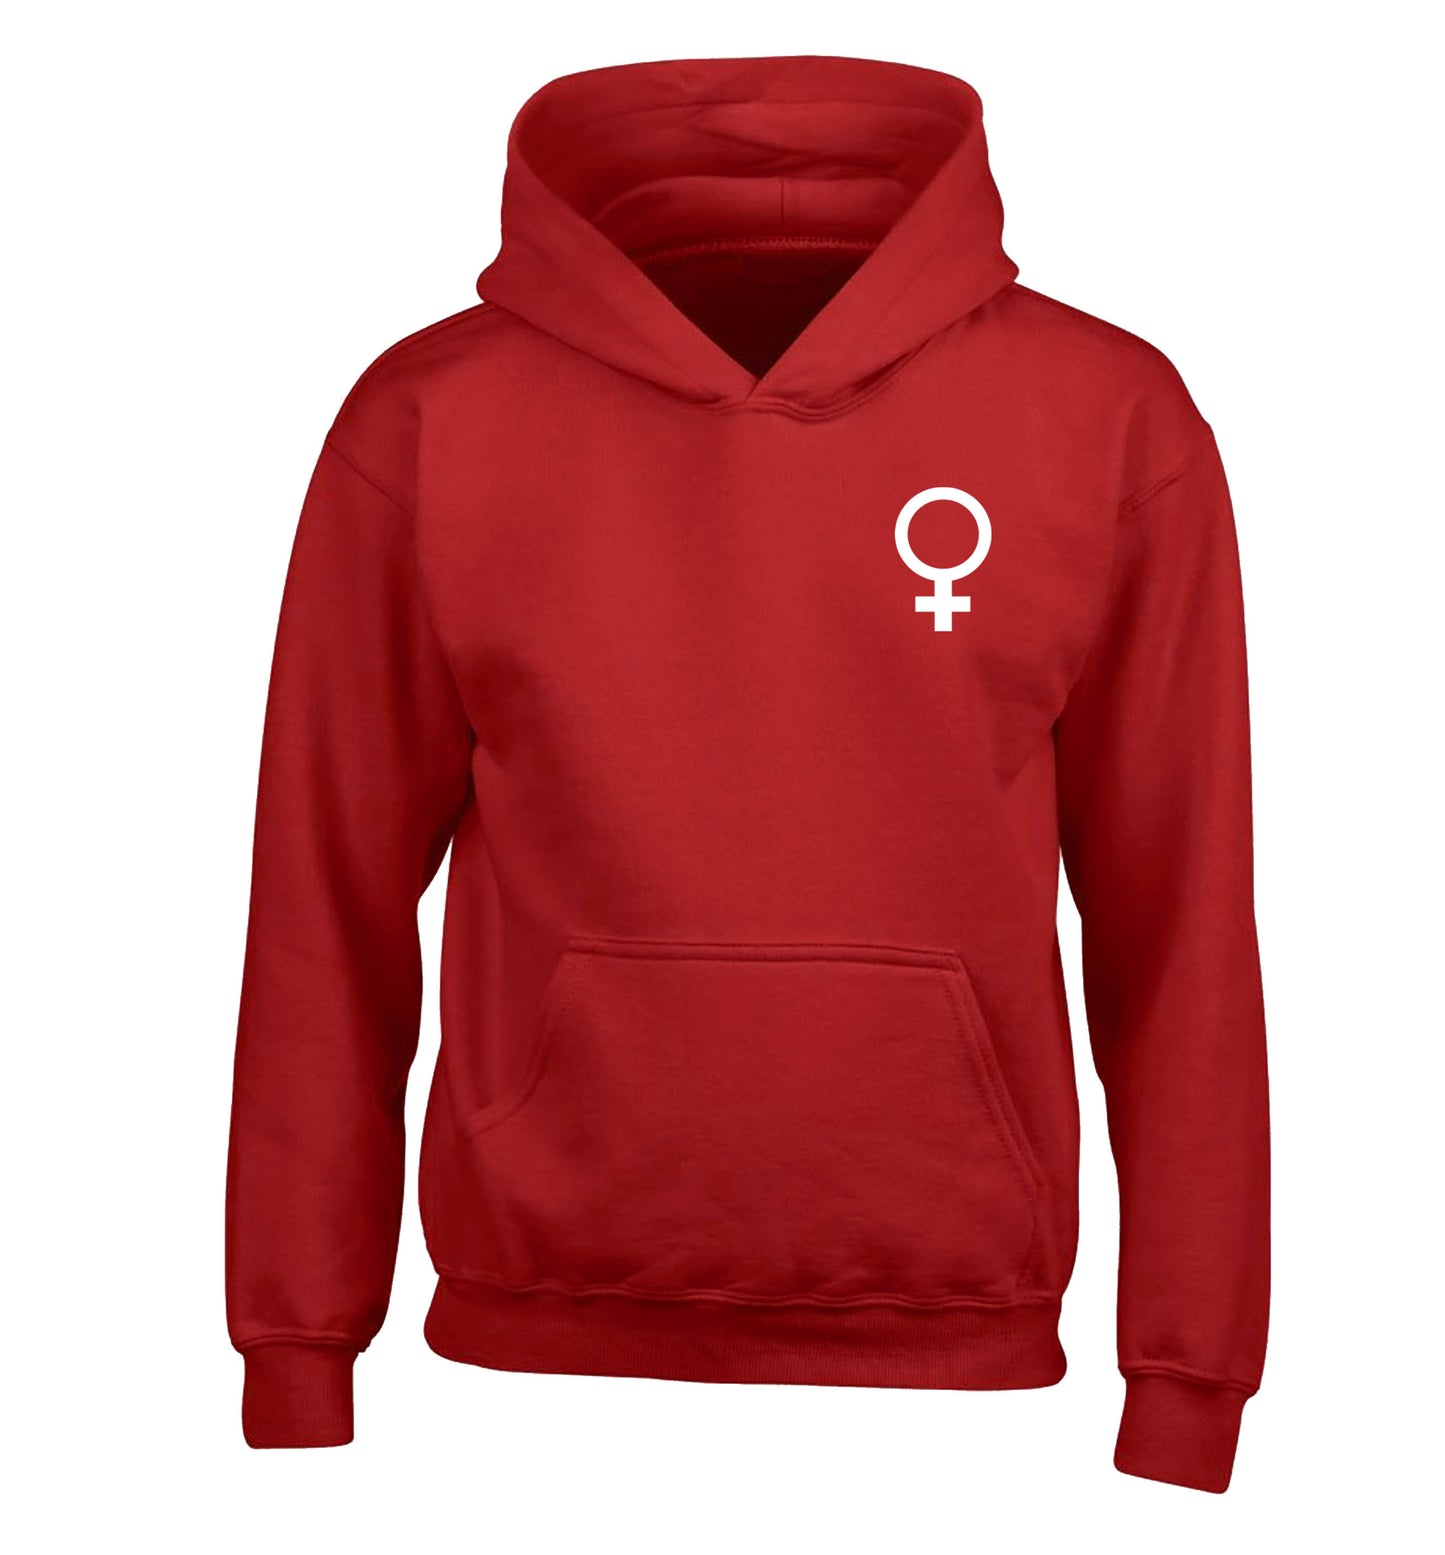 Female pocket symbol children's red hoodie 12-14 Years